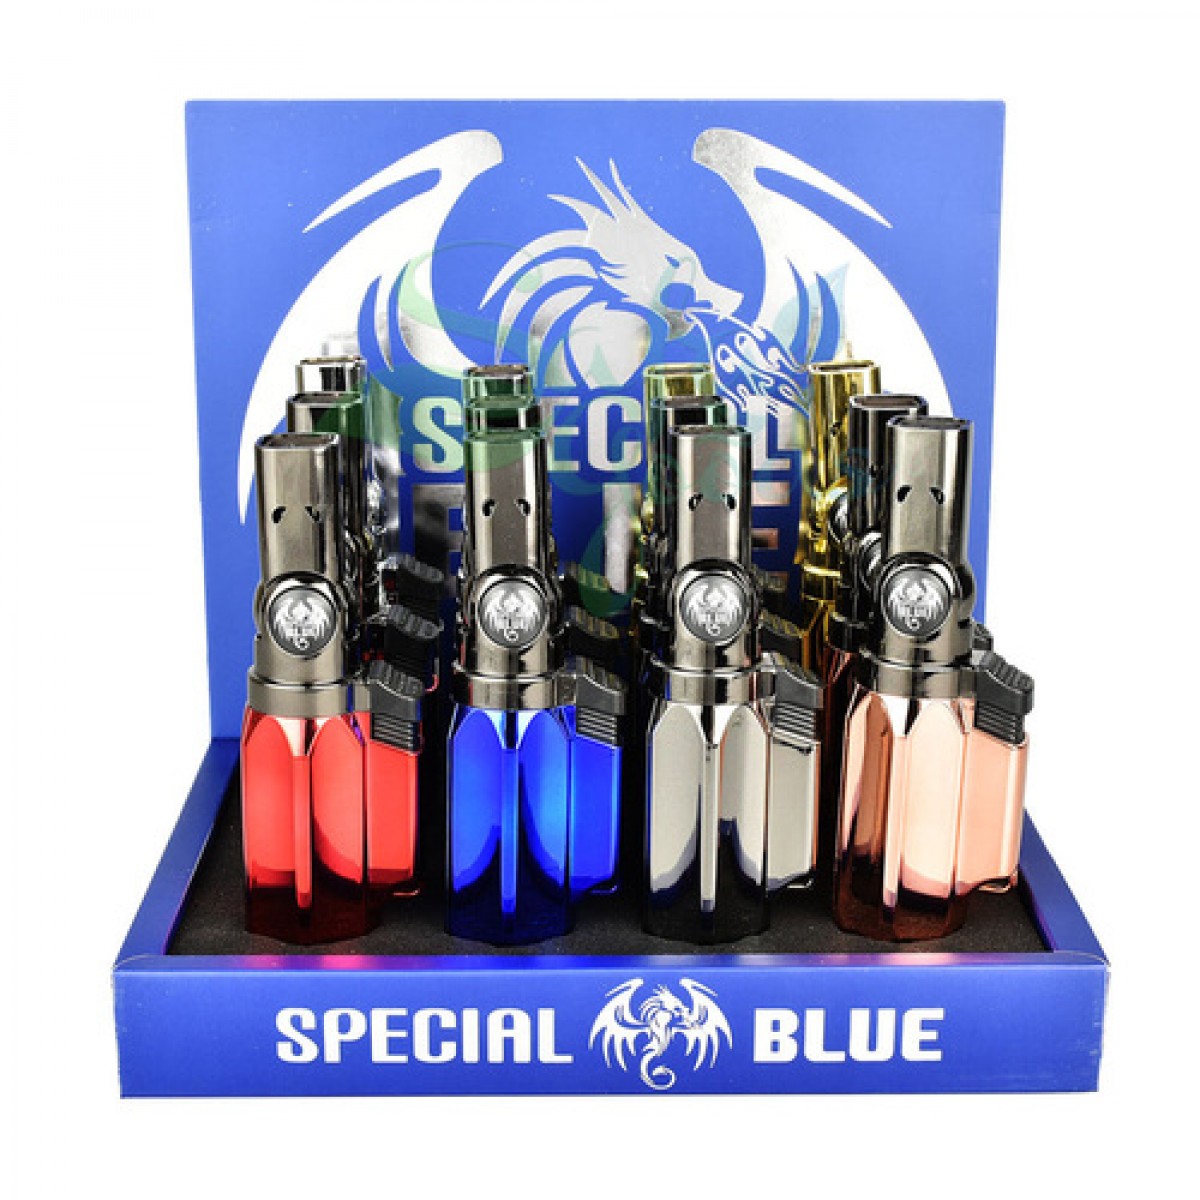 Special Blue - Lazer Lighter Display - 12PC